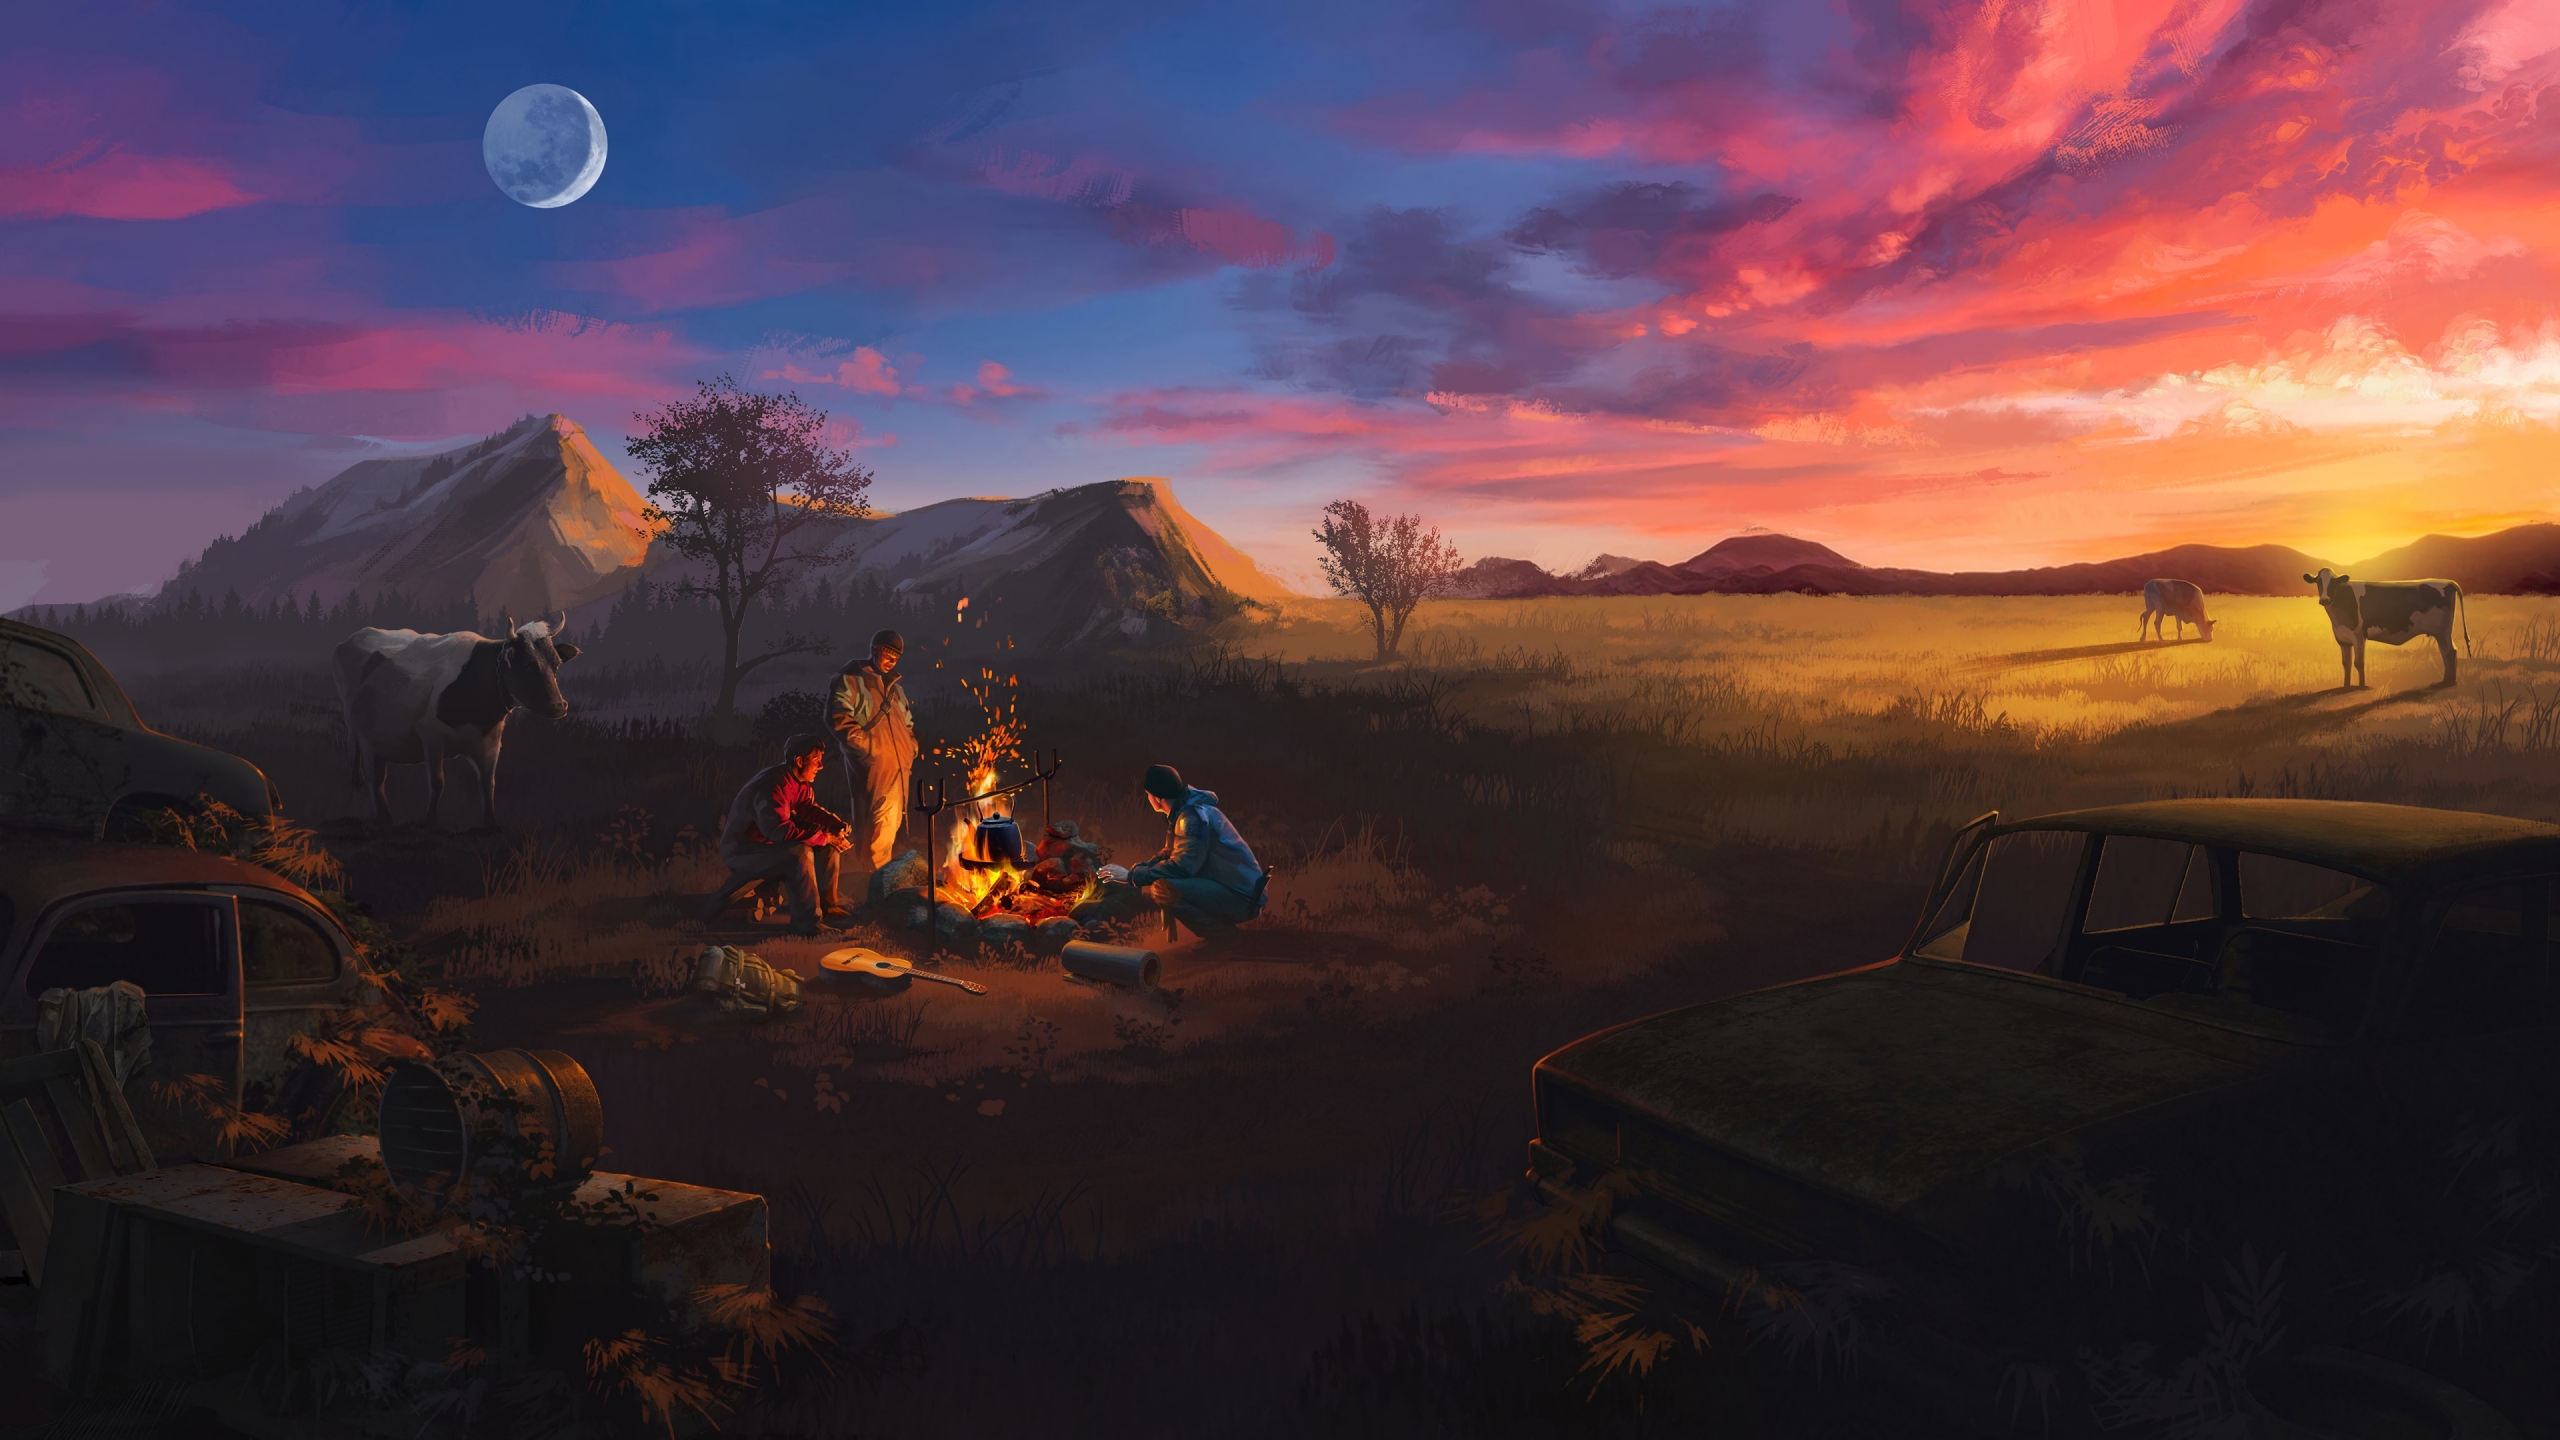 Bonfire while camping at sunset artwork wallpaper k ultra hd id